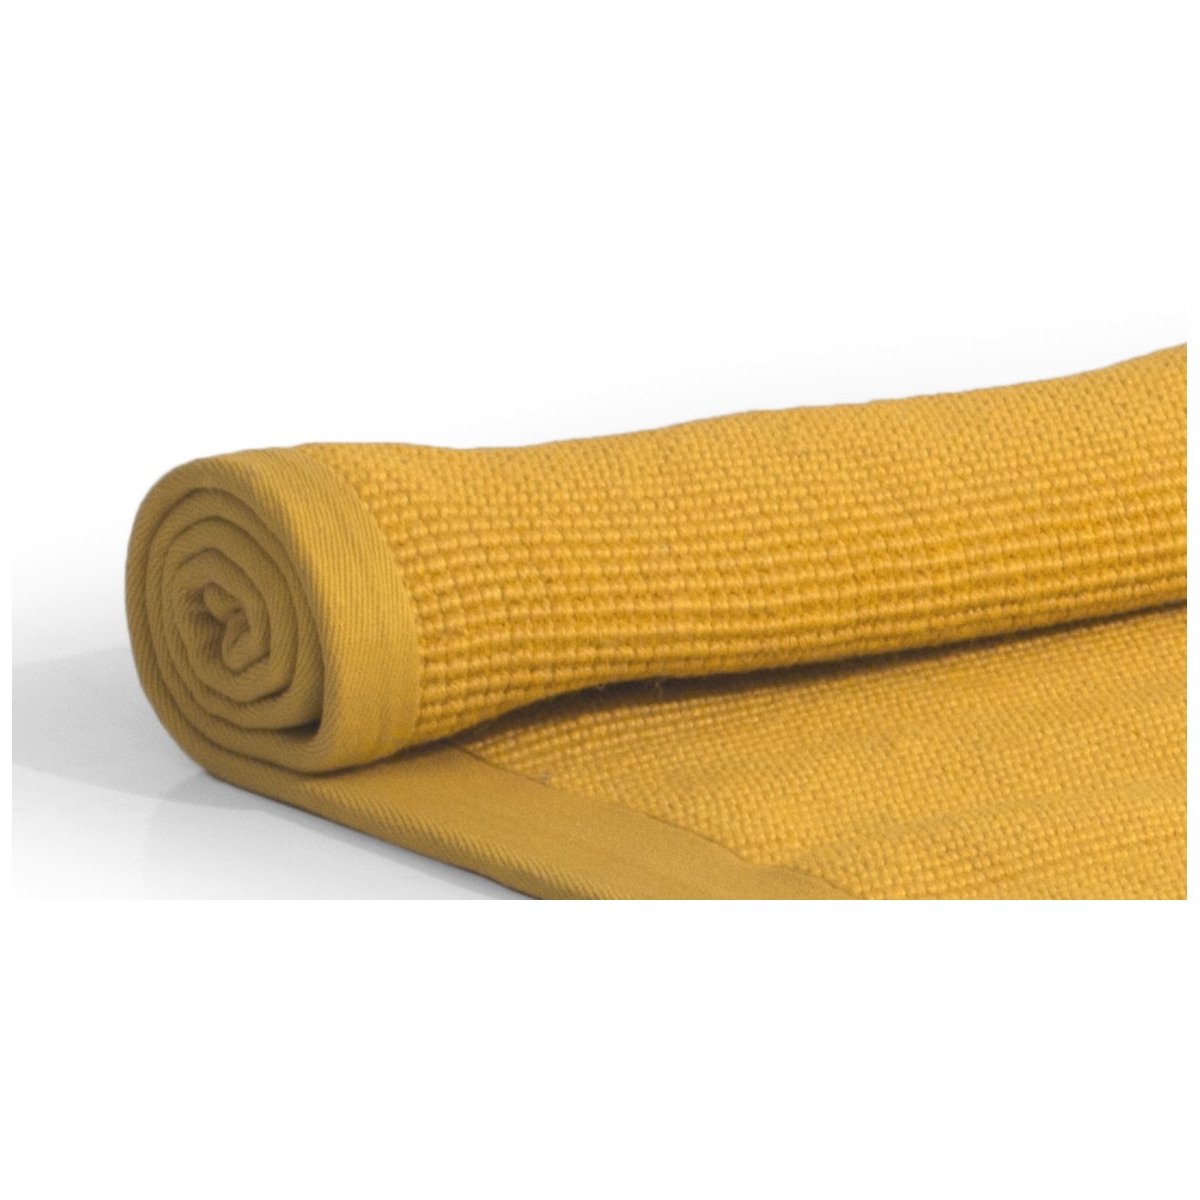 074 - Jute rug - Citrus yellow - 160x240